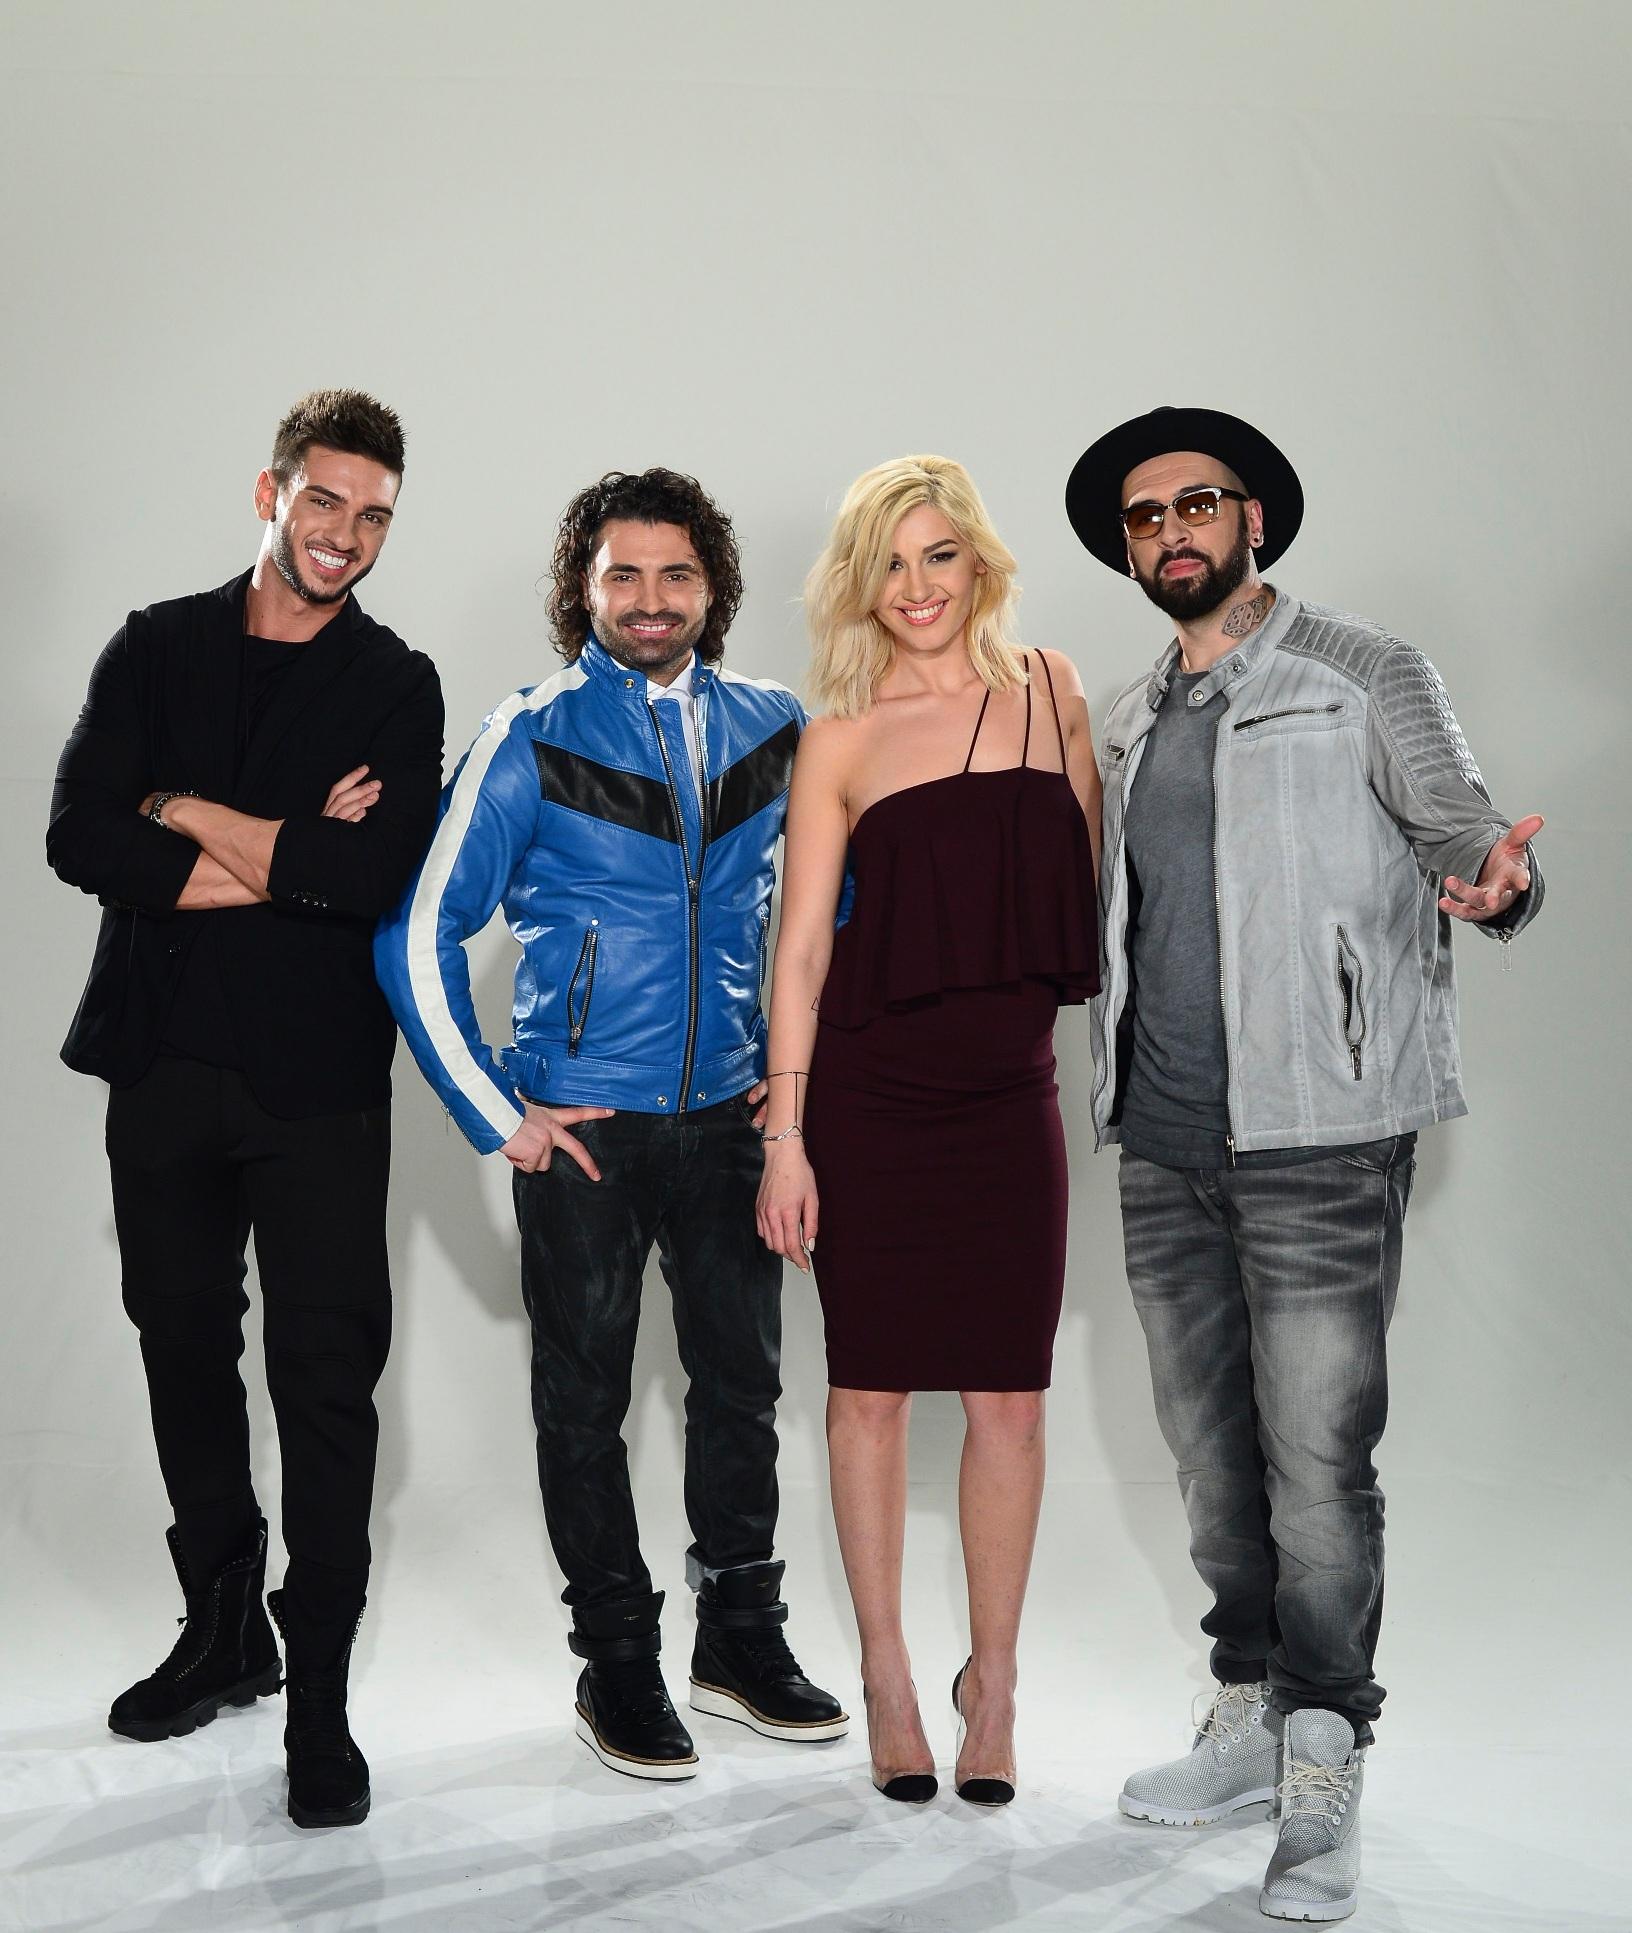 Emisiunea-fenomen revine la Antena 1, din 11 februarie! Alina Eremia, Dorian Popa, CRBL și Pepe sunt jurații “Next Star”